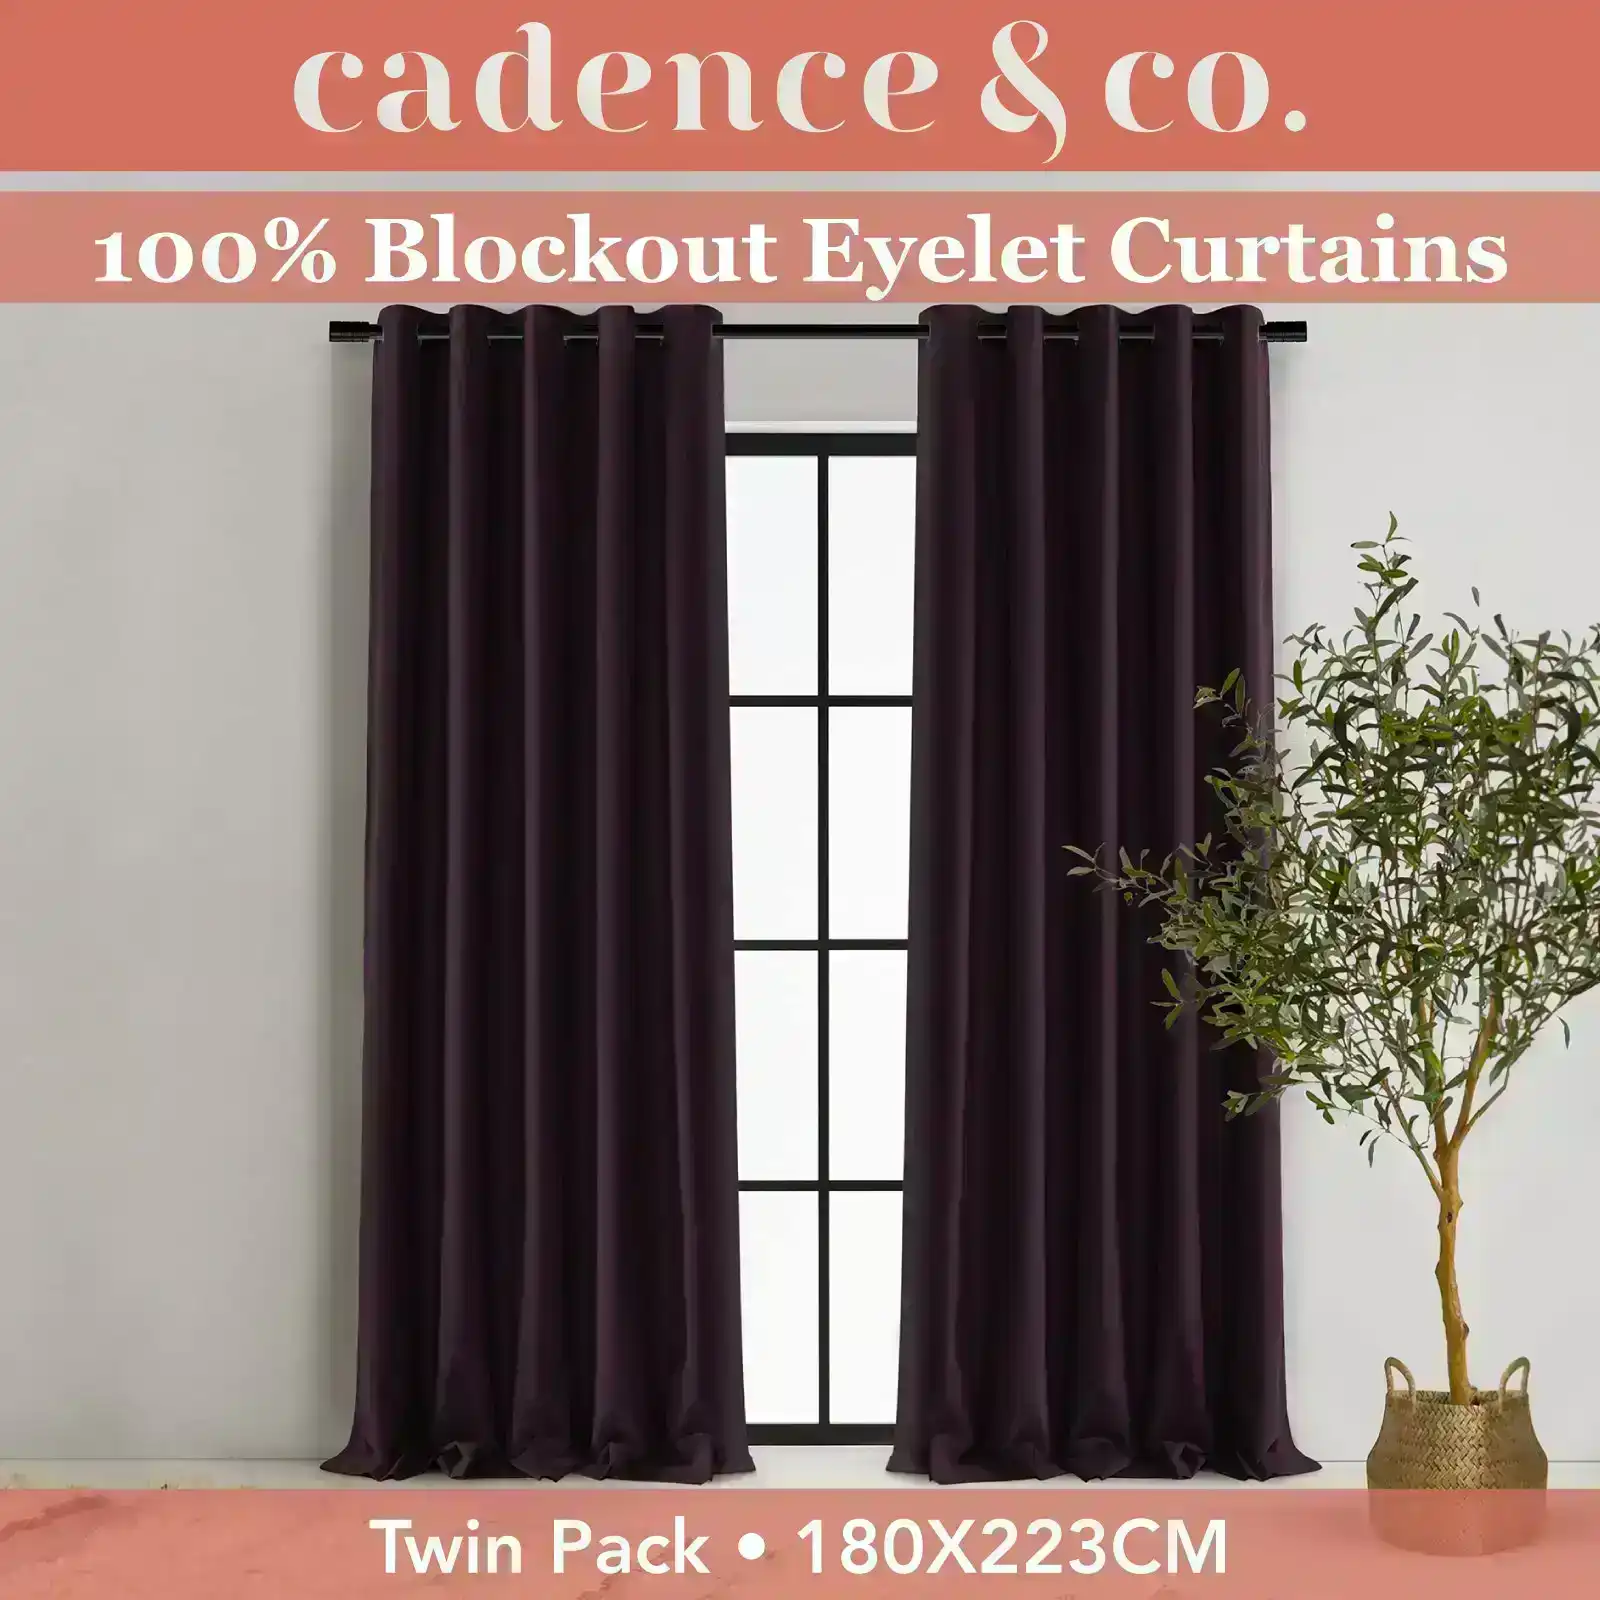 Cadence & Co Byron Matte Velvet 100% Blockout Eyelet Curtains Twin Pack Aubergine 180x223cm